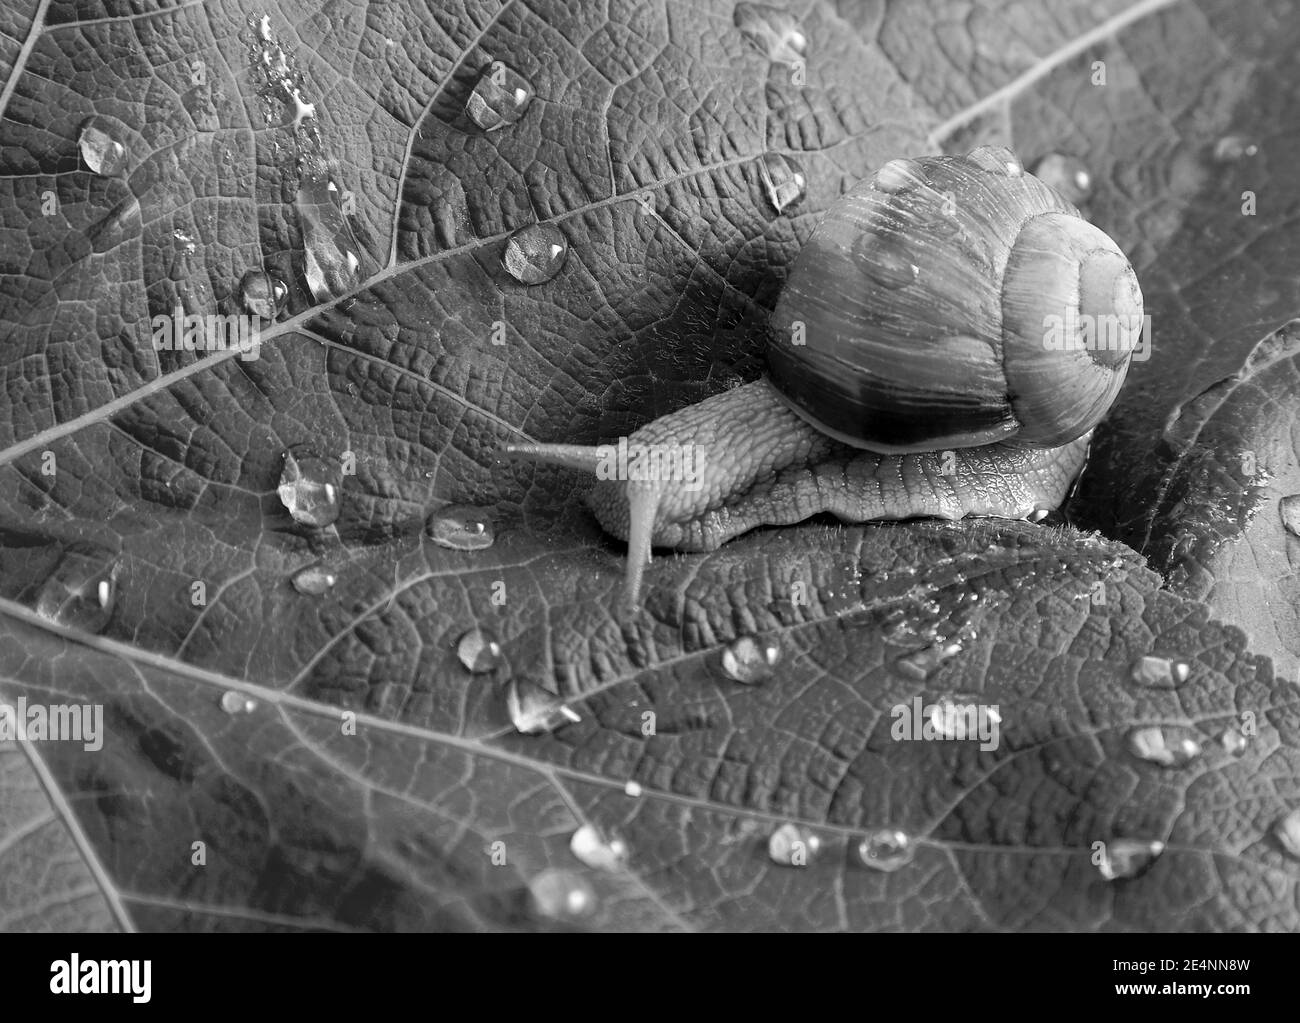 Garden snail on a wet leaf. Stock Photo